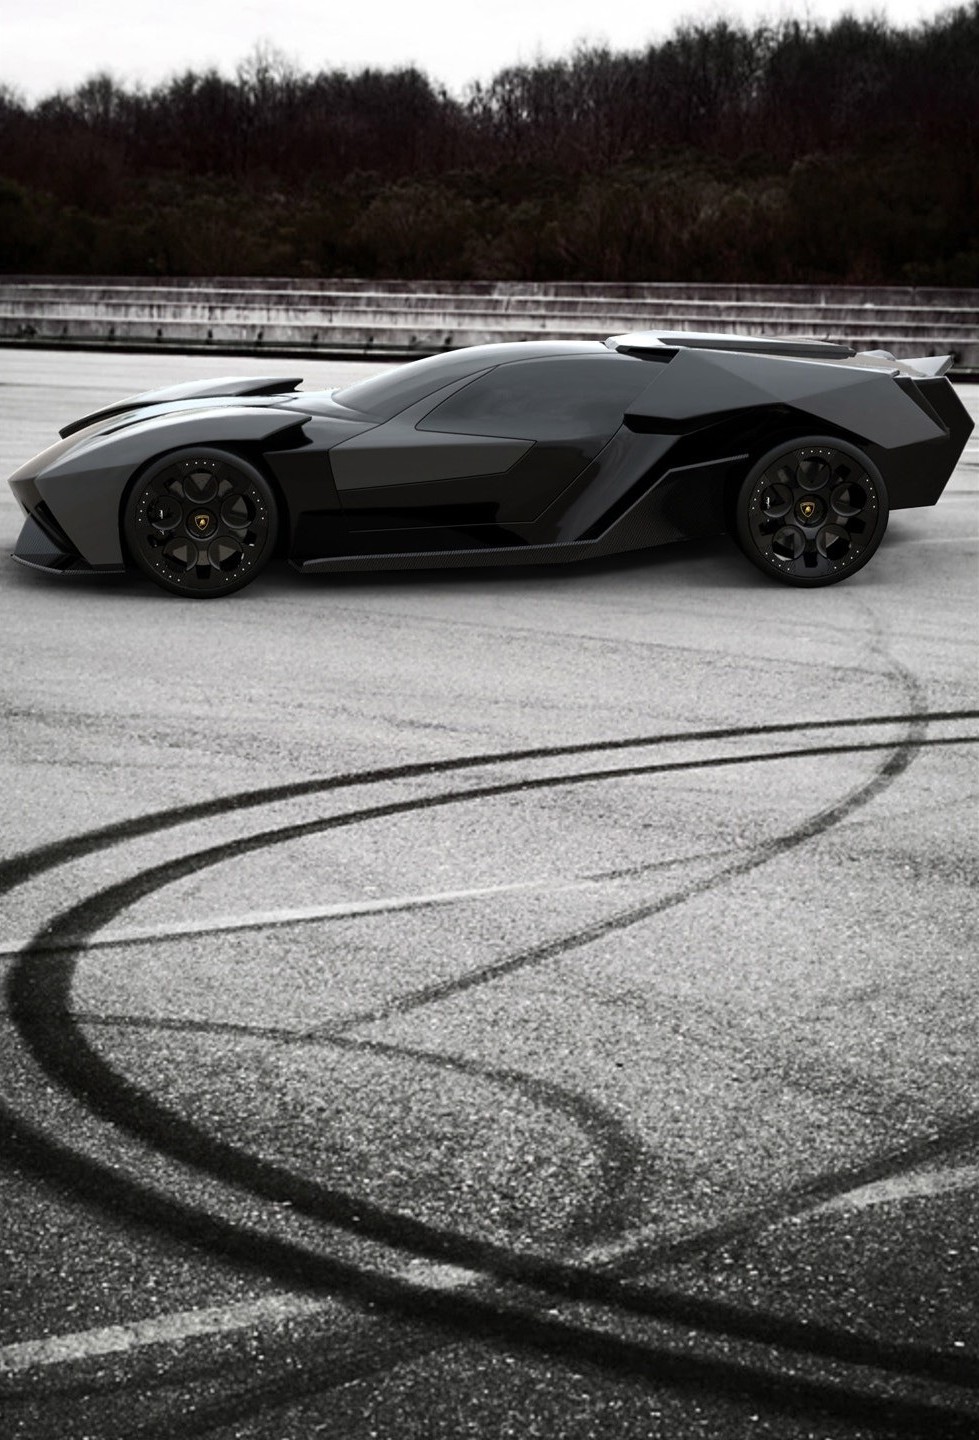 Lamborghini Ankonian Concept Car Images, Photos, Reviews